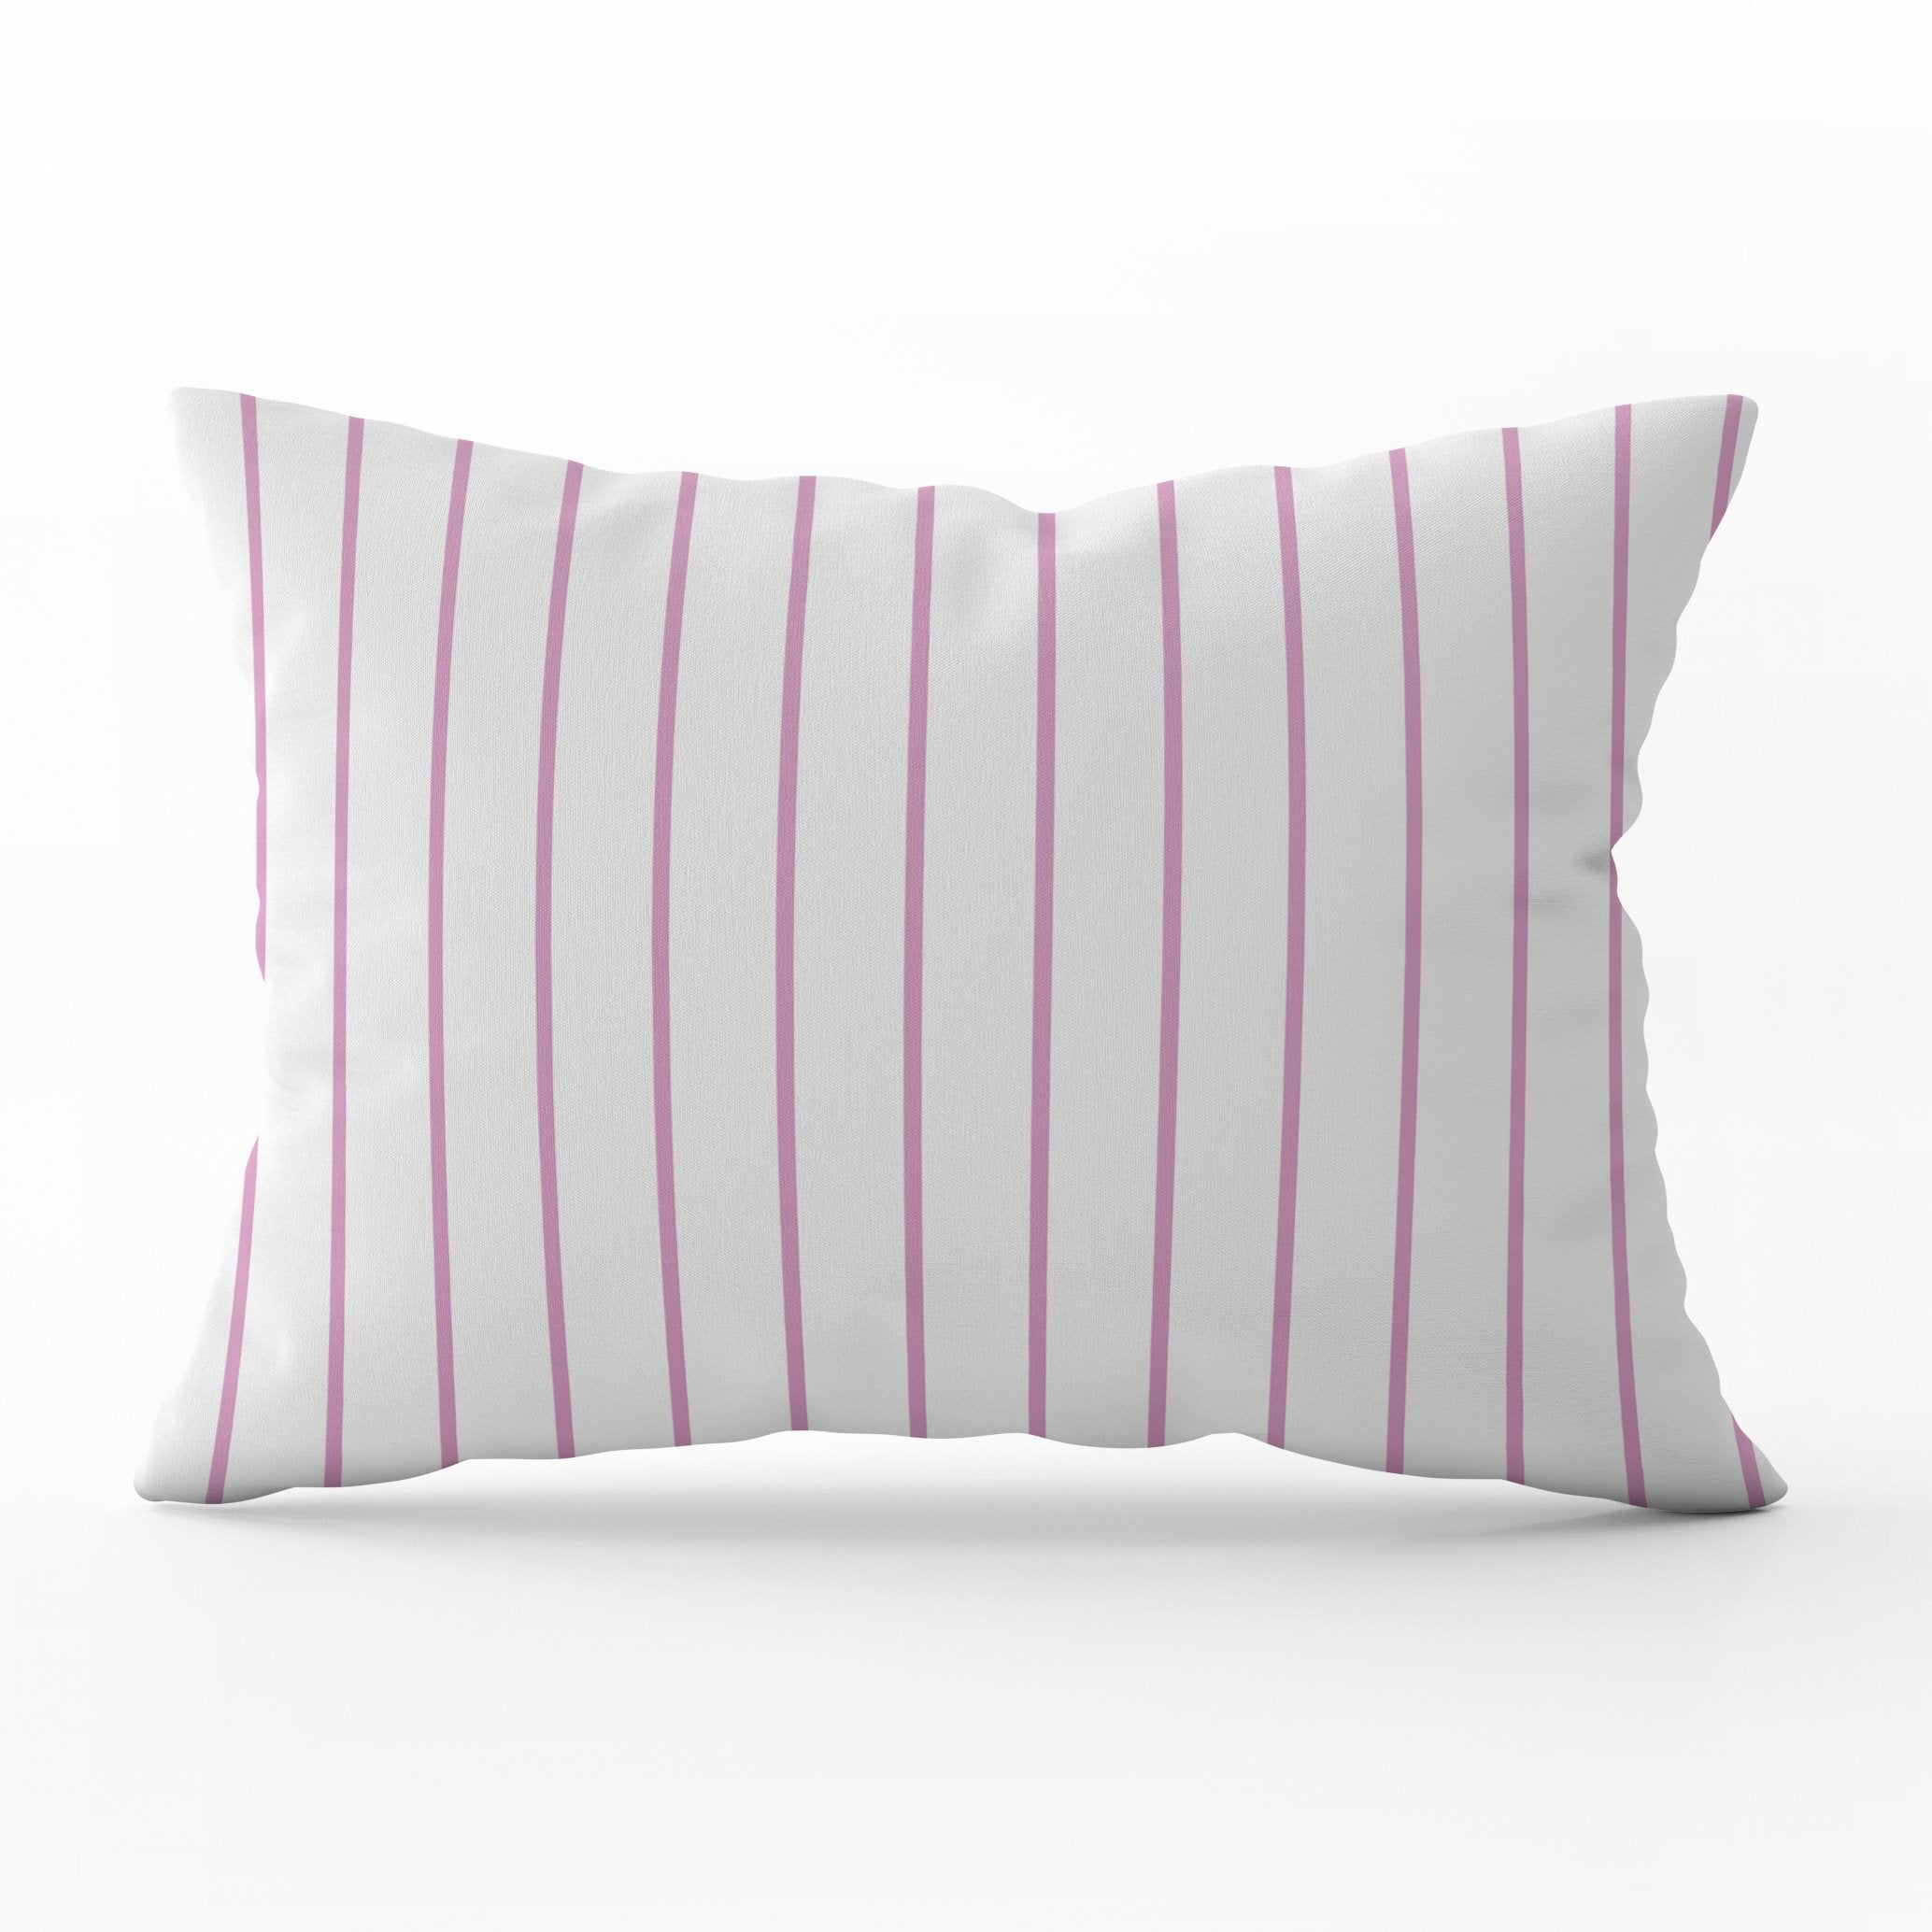 Breton Stripe Cushion - Pinks - Hydrangea Lane Home